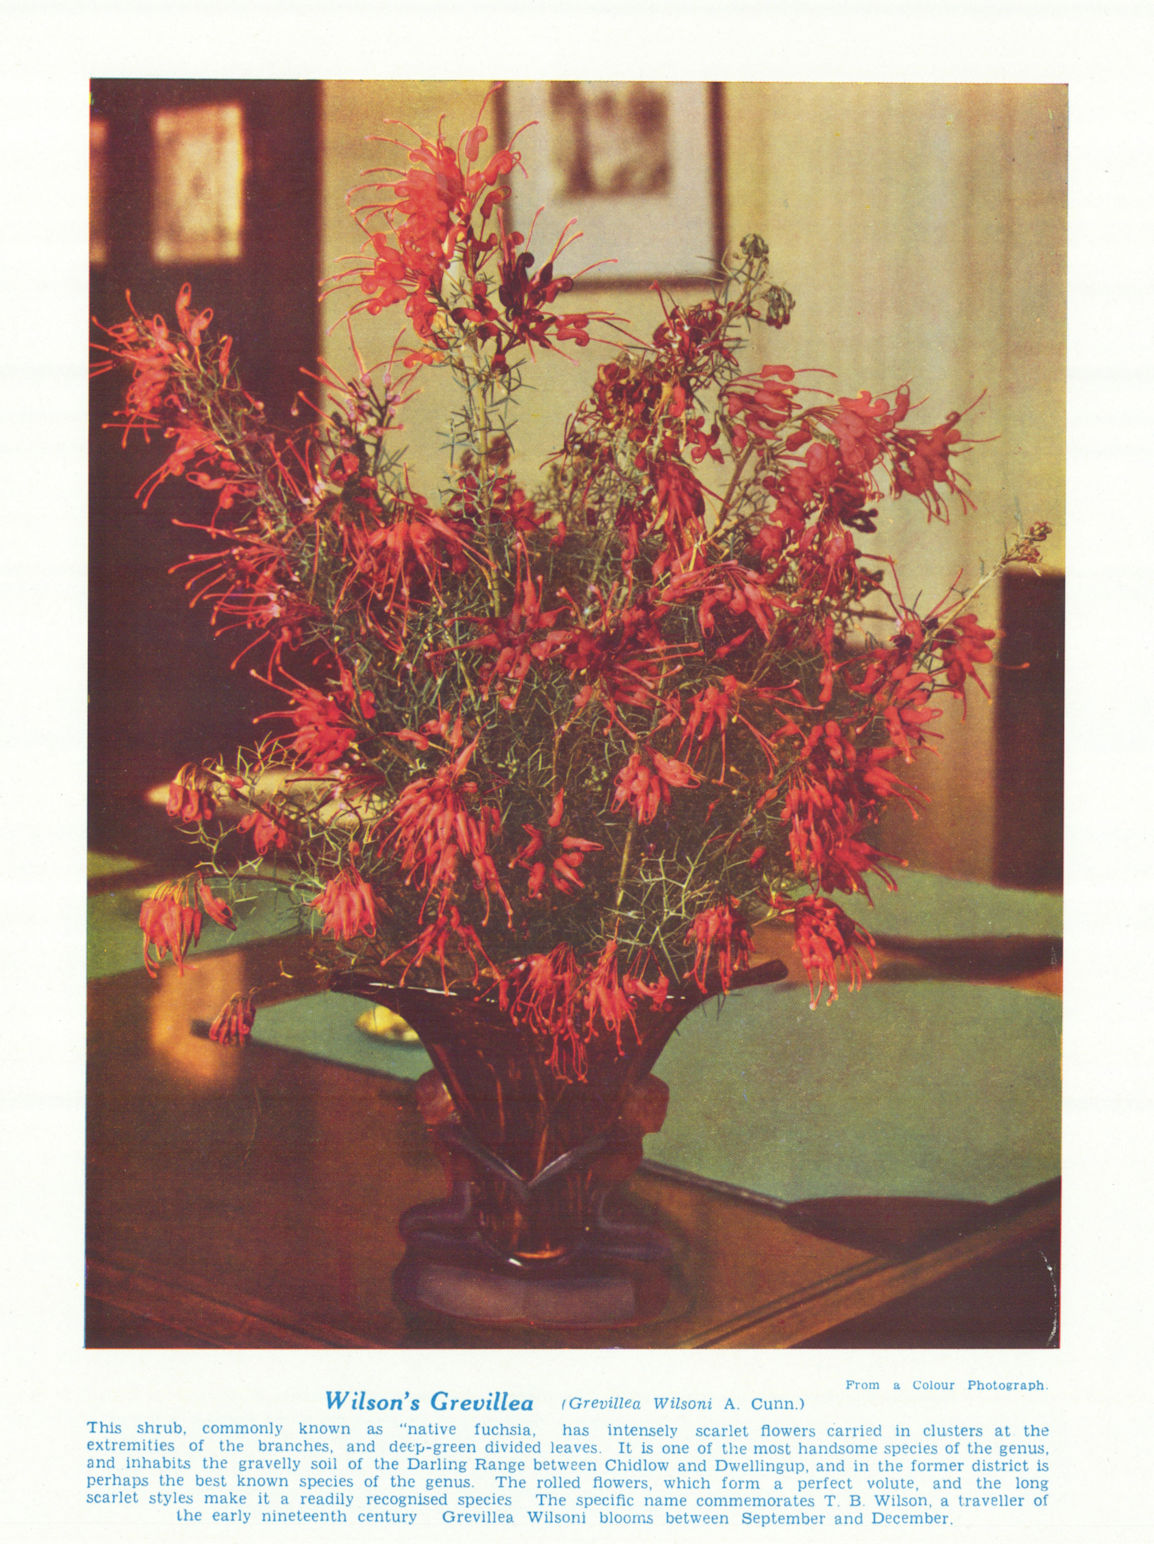 Wilson's Grevillea (Grevillea Wilsoni). West Australian Wild Flowers 1950